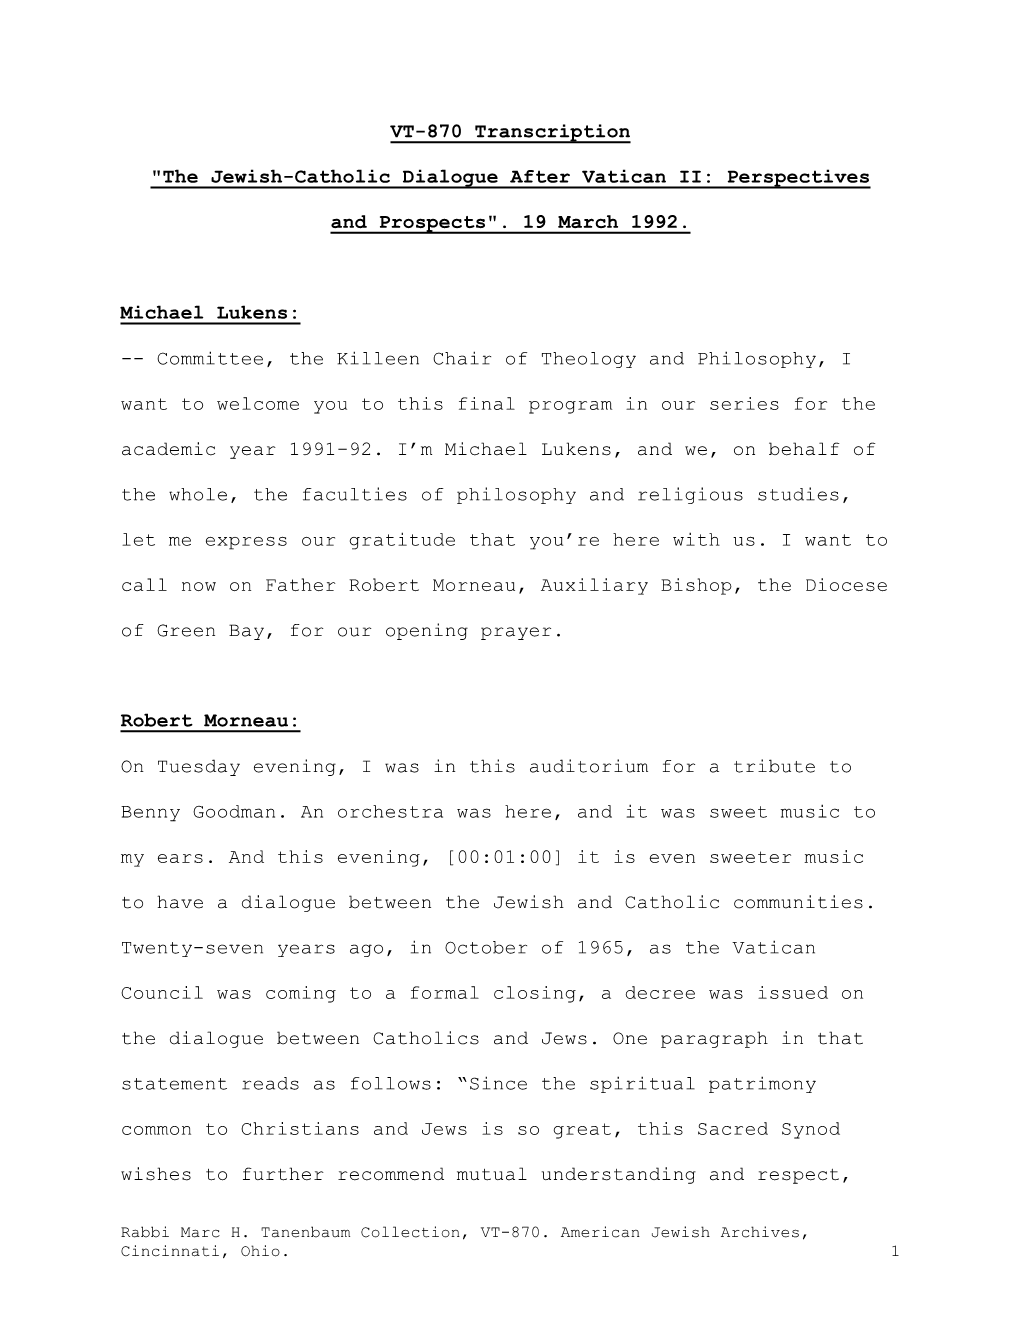 VT-870 Transcription "The Jewish-Catholic Dialogue After Vatican II